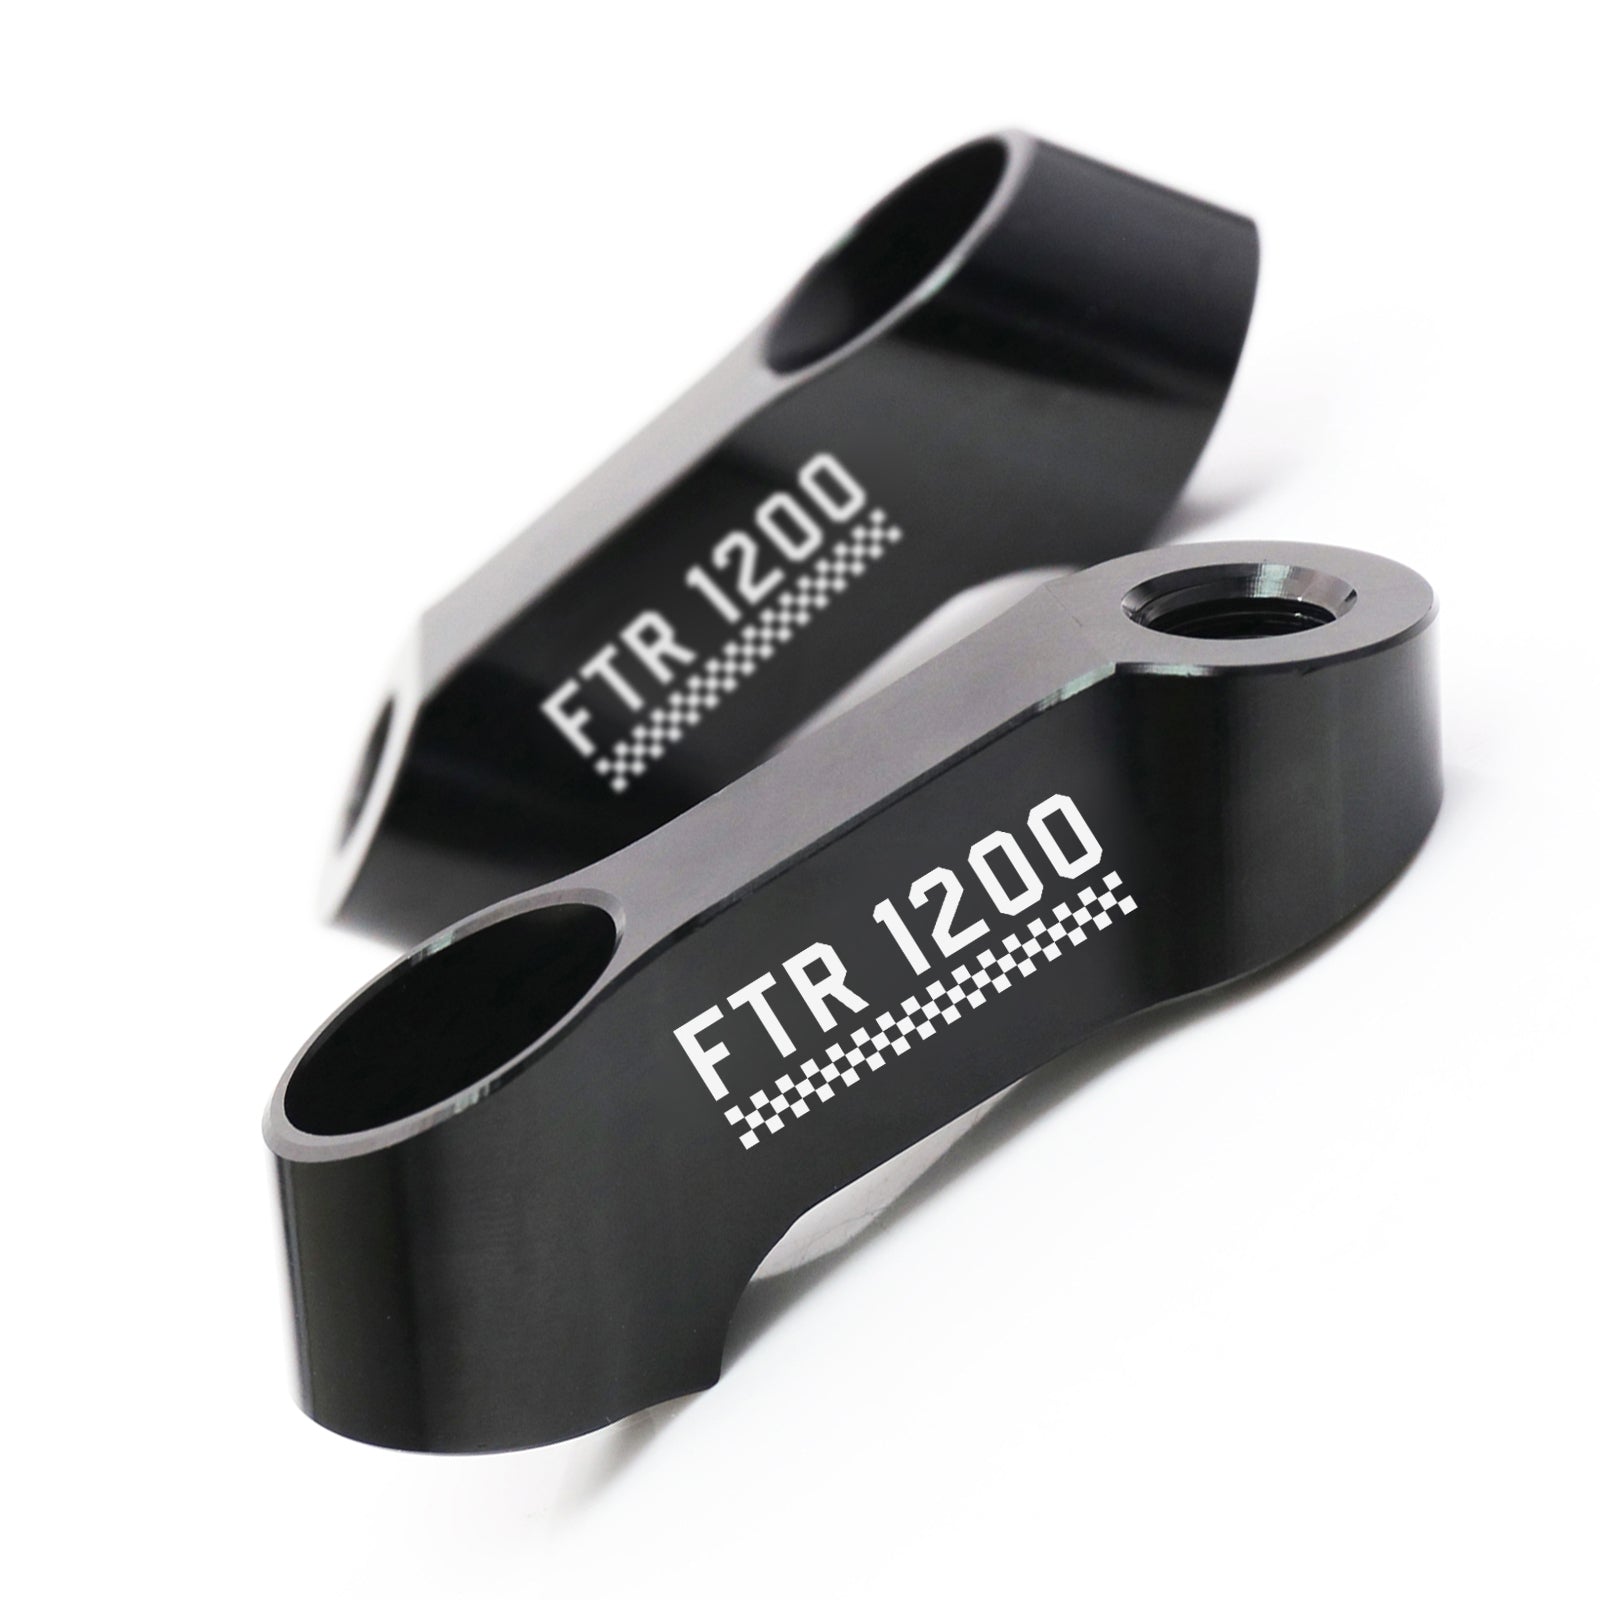 Fit Indian FTR1200 2019-2020 Engraved Check Logo Side Mirror Extender Riser - MC Motoparts